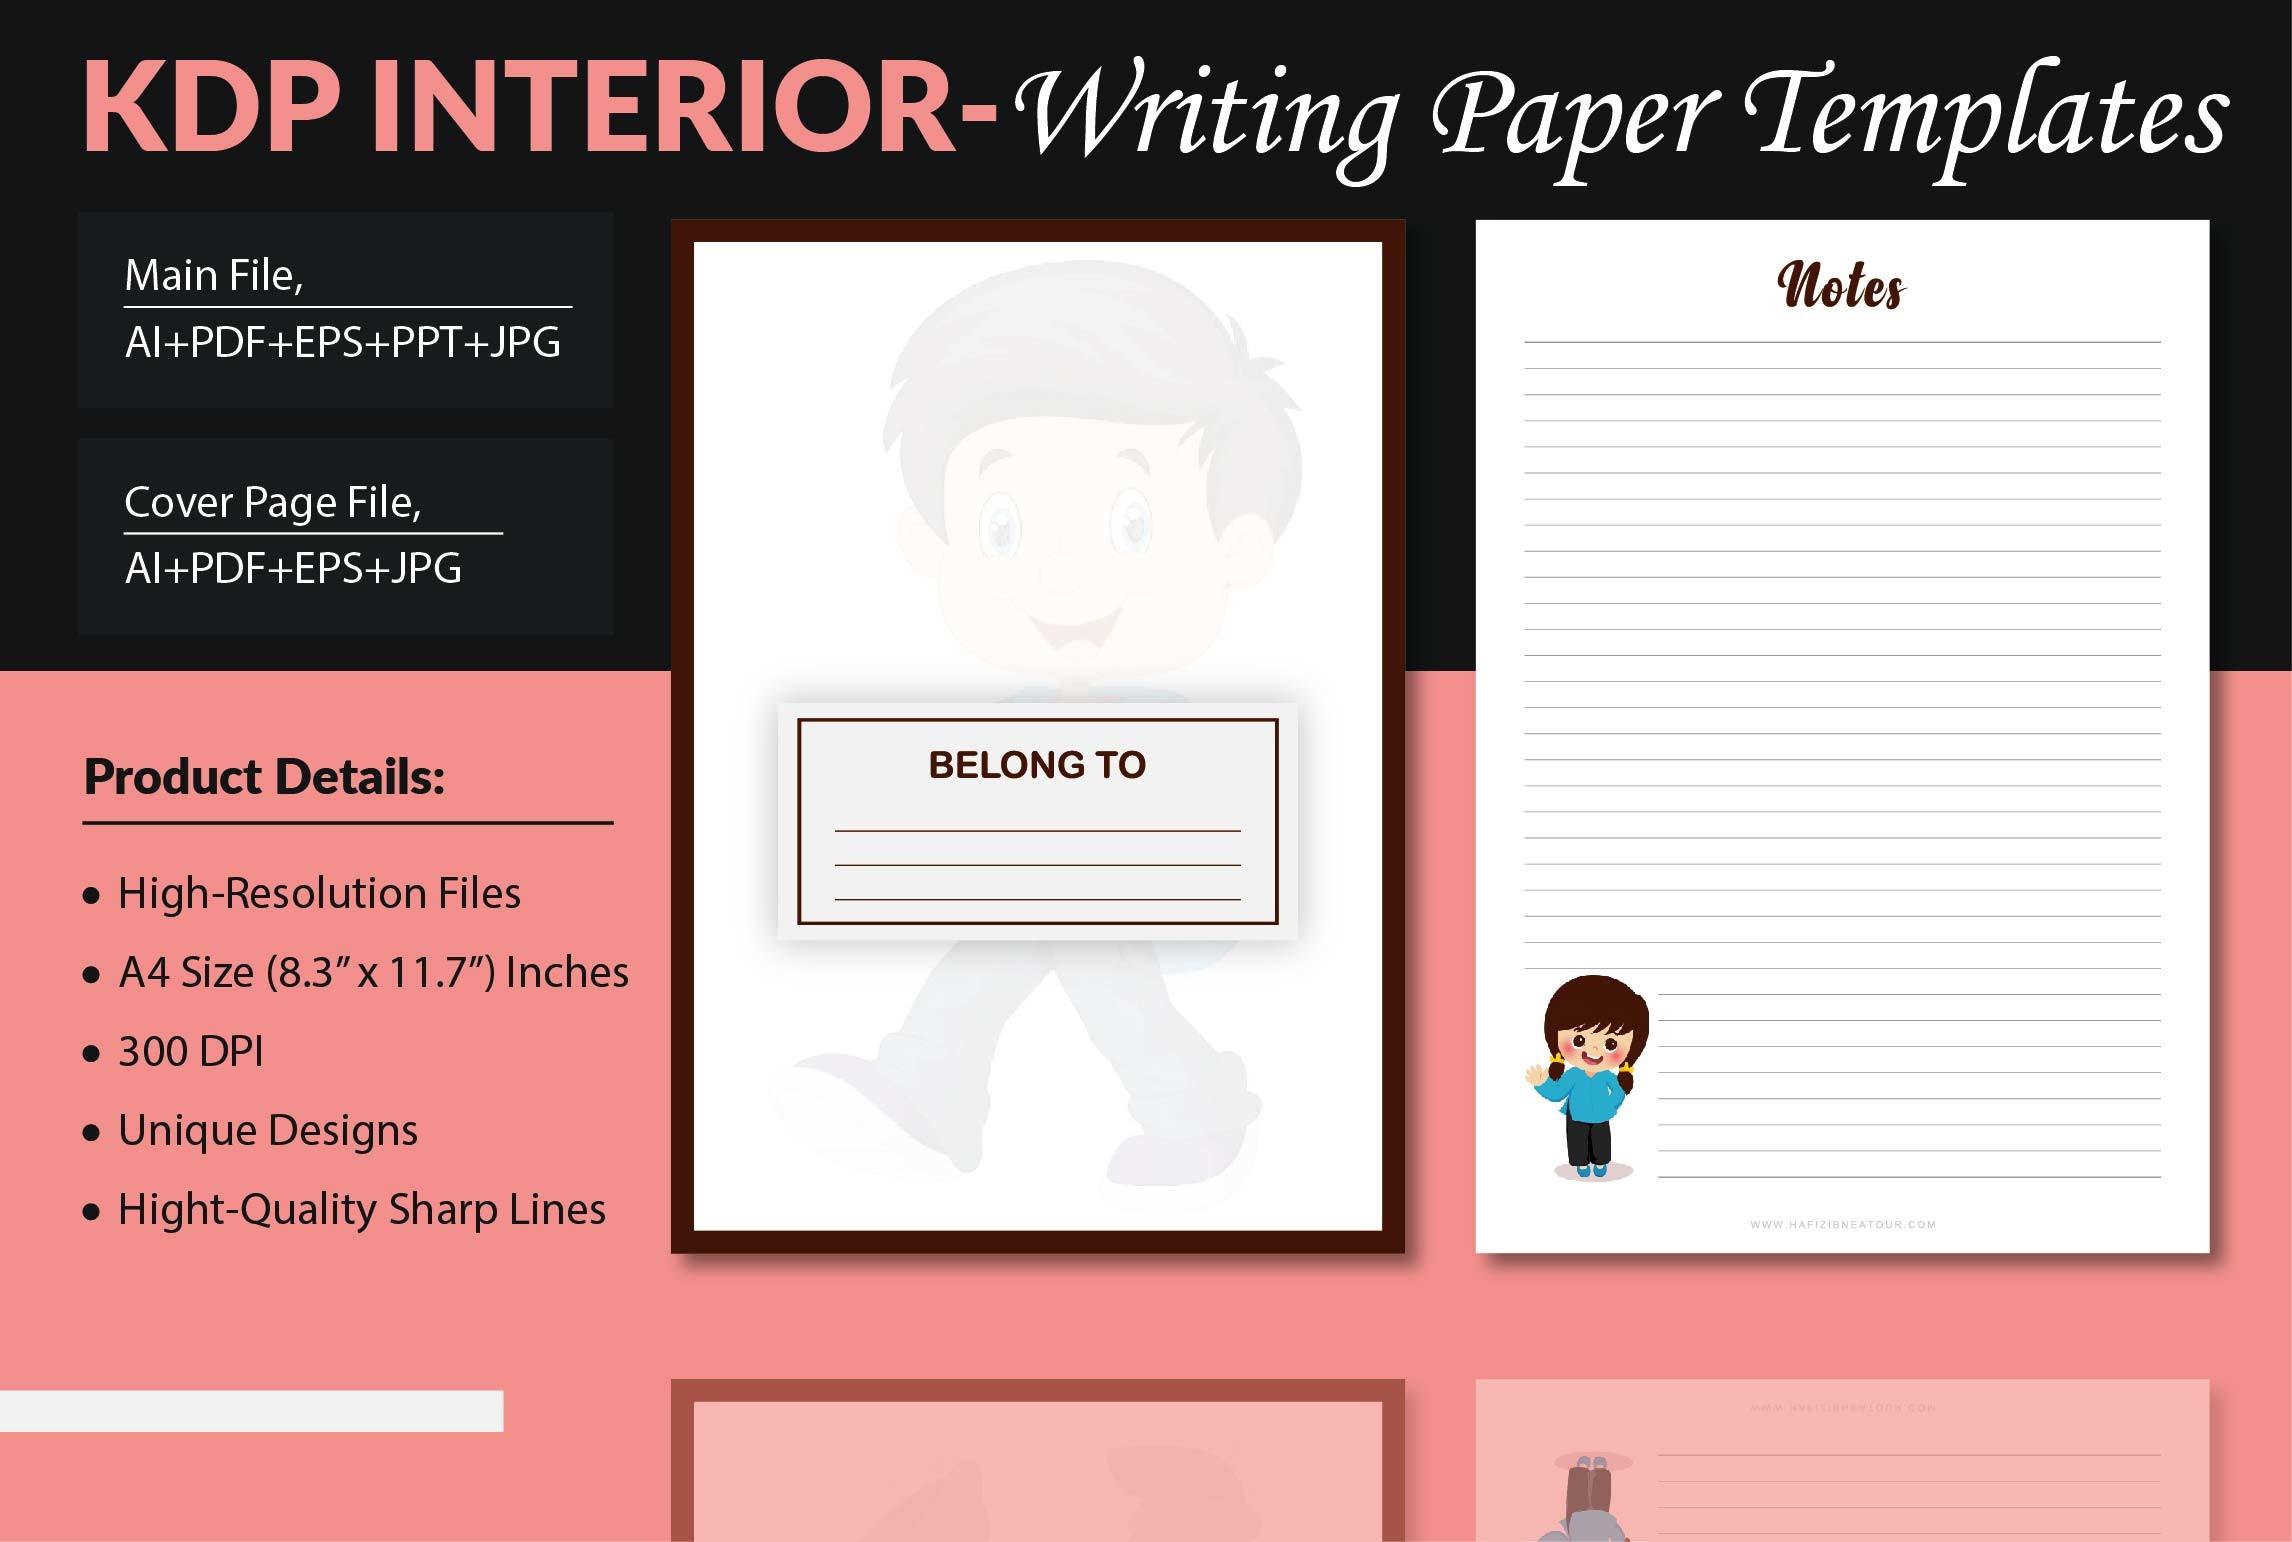 Writing Paper Templates - KDP Interior